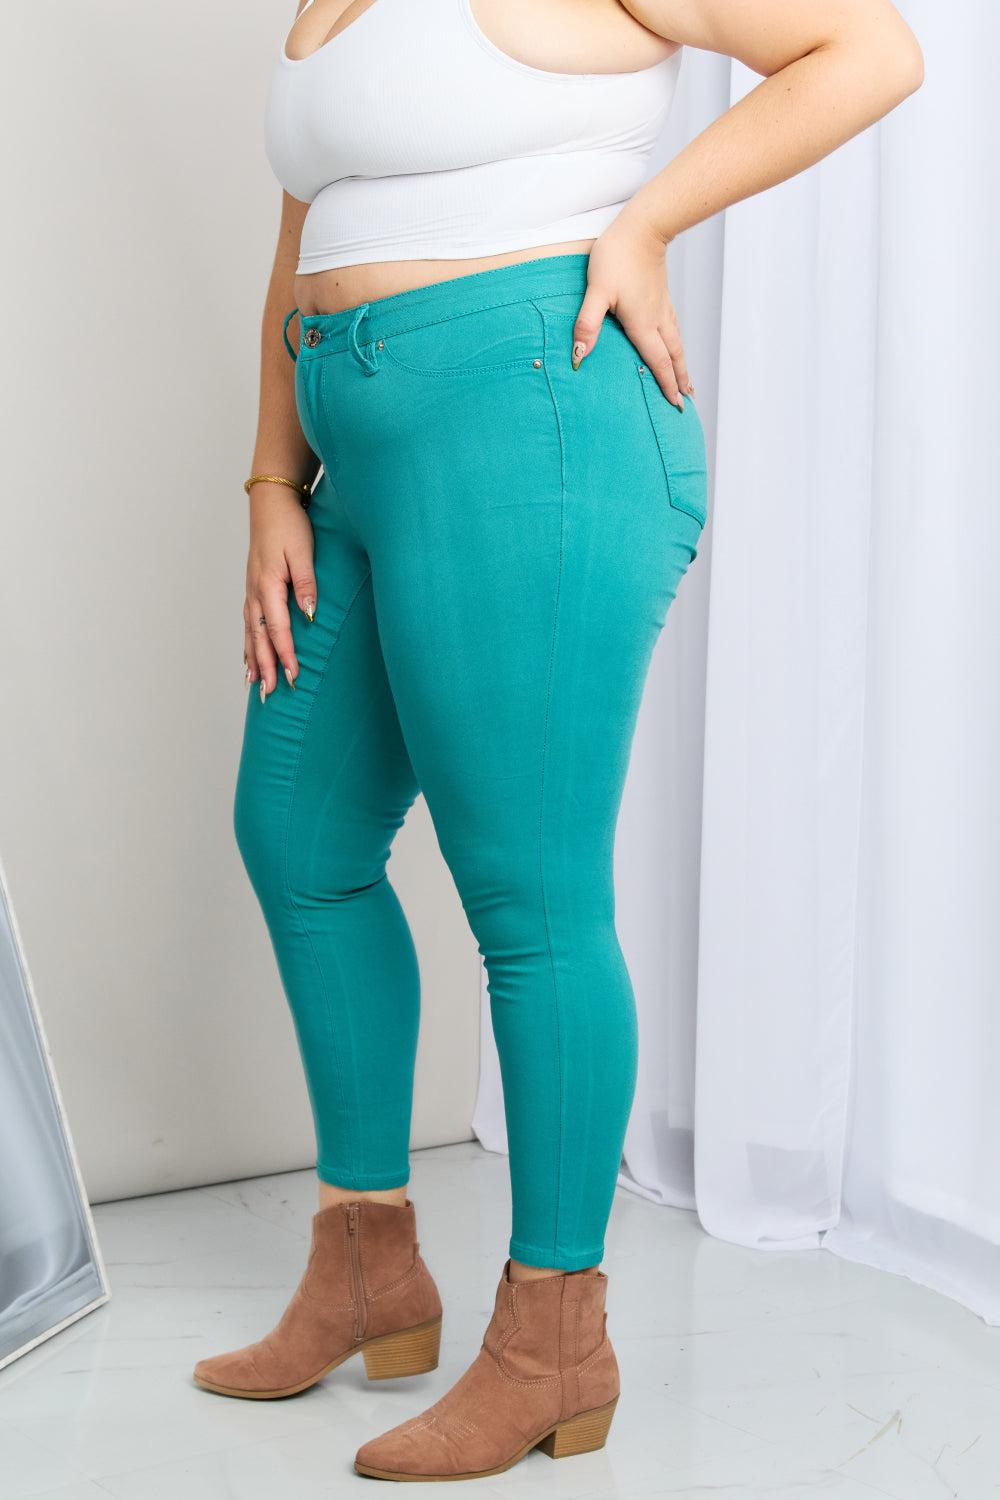 YMI Jeanswear Kate Hyper-Stretch Full Size Mid-Rise Skinny Jeans in Sea Green BLUE ZONE PLANET